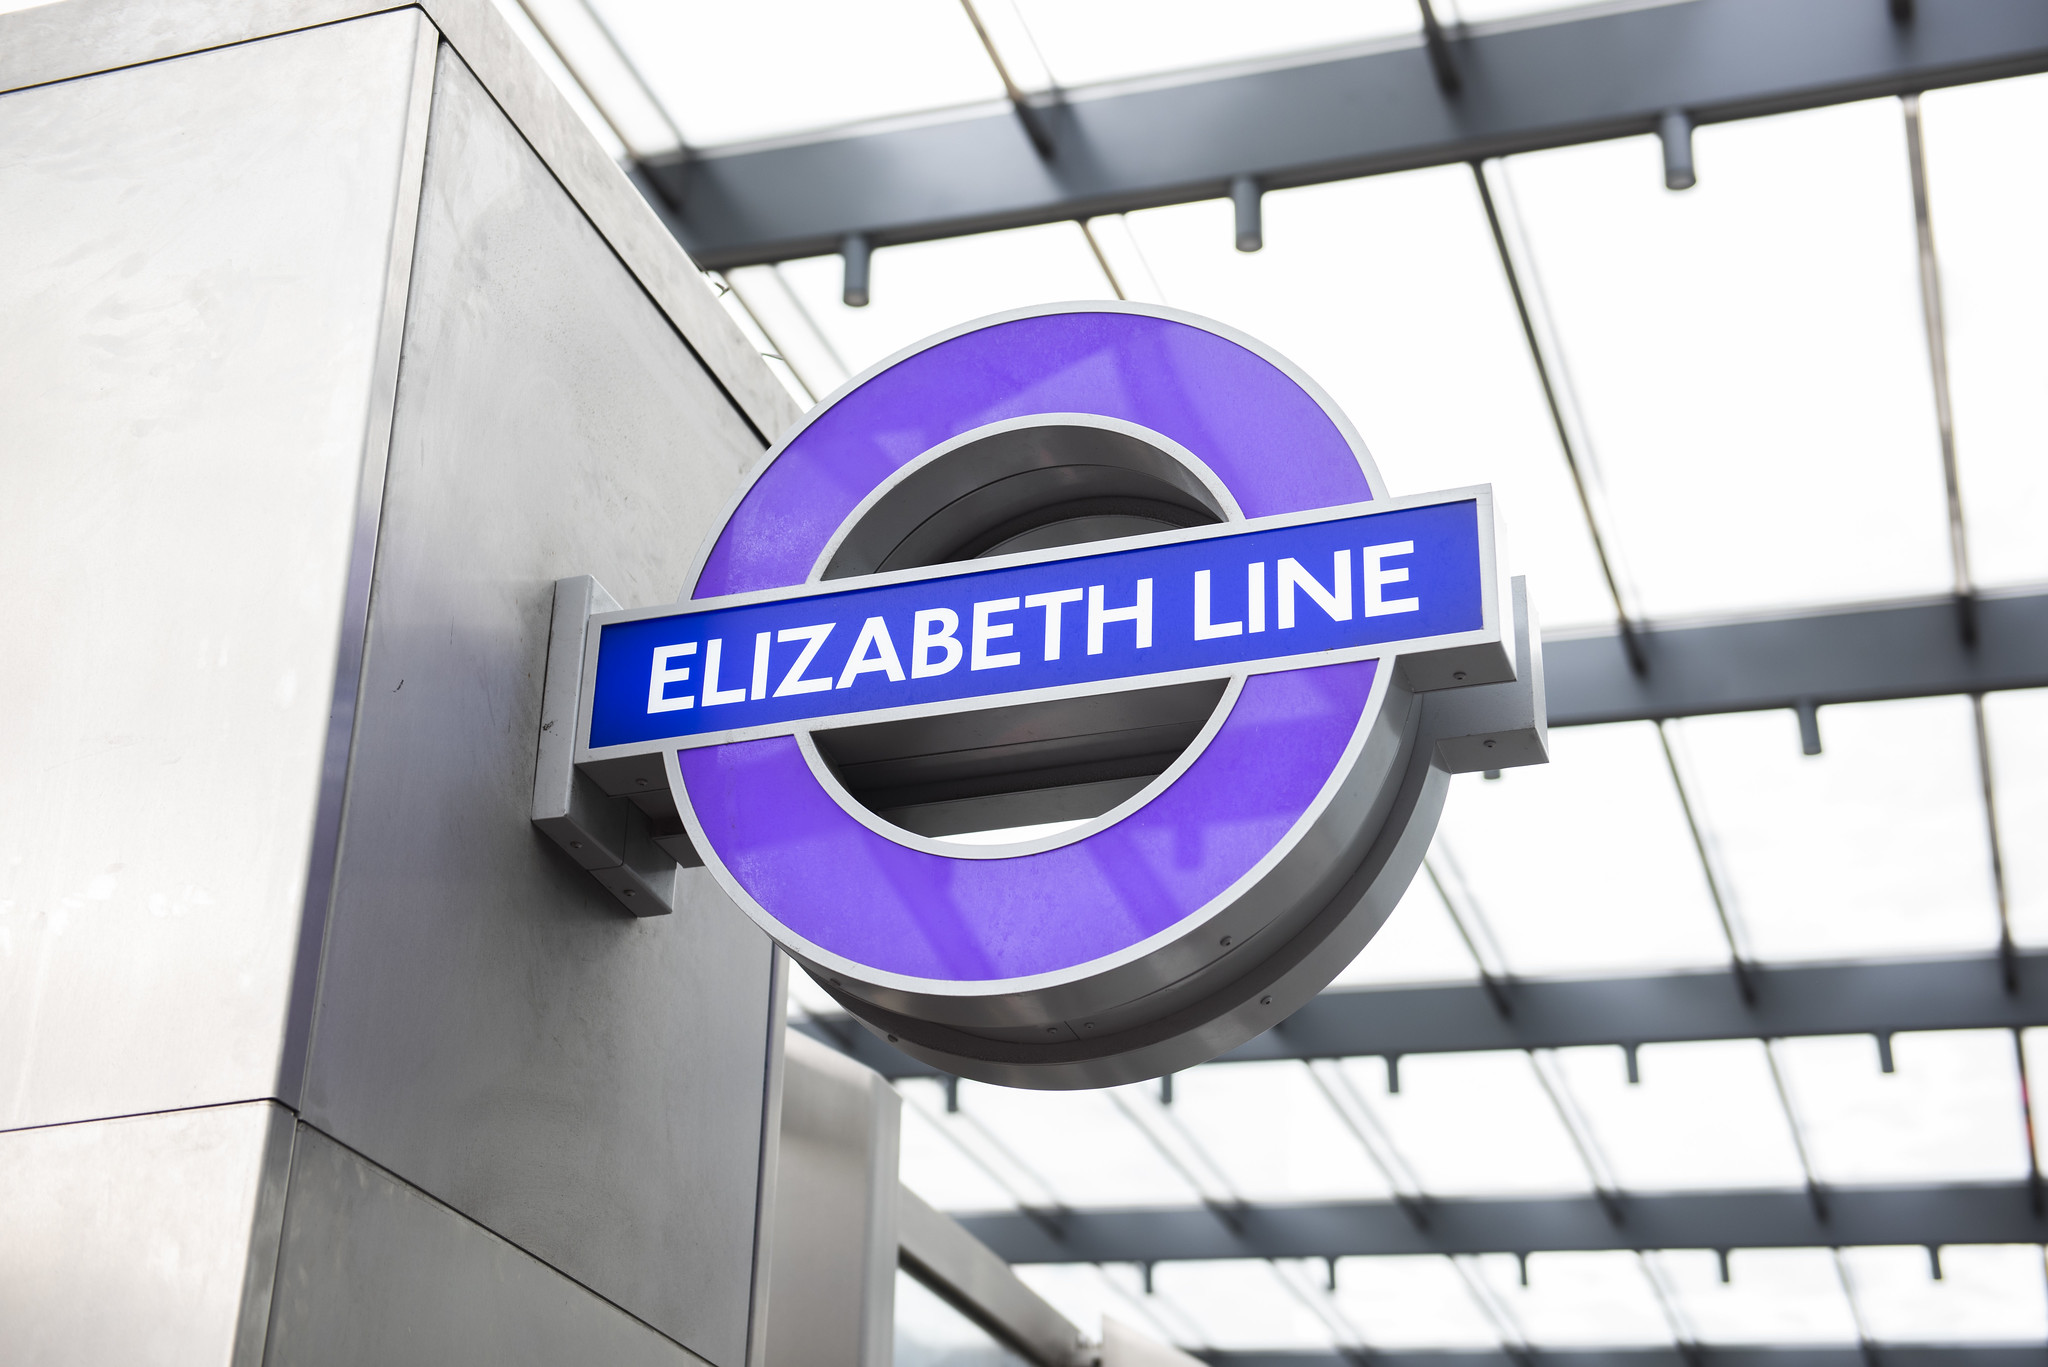 Elizabeth line symbol
